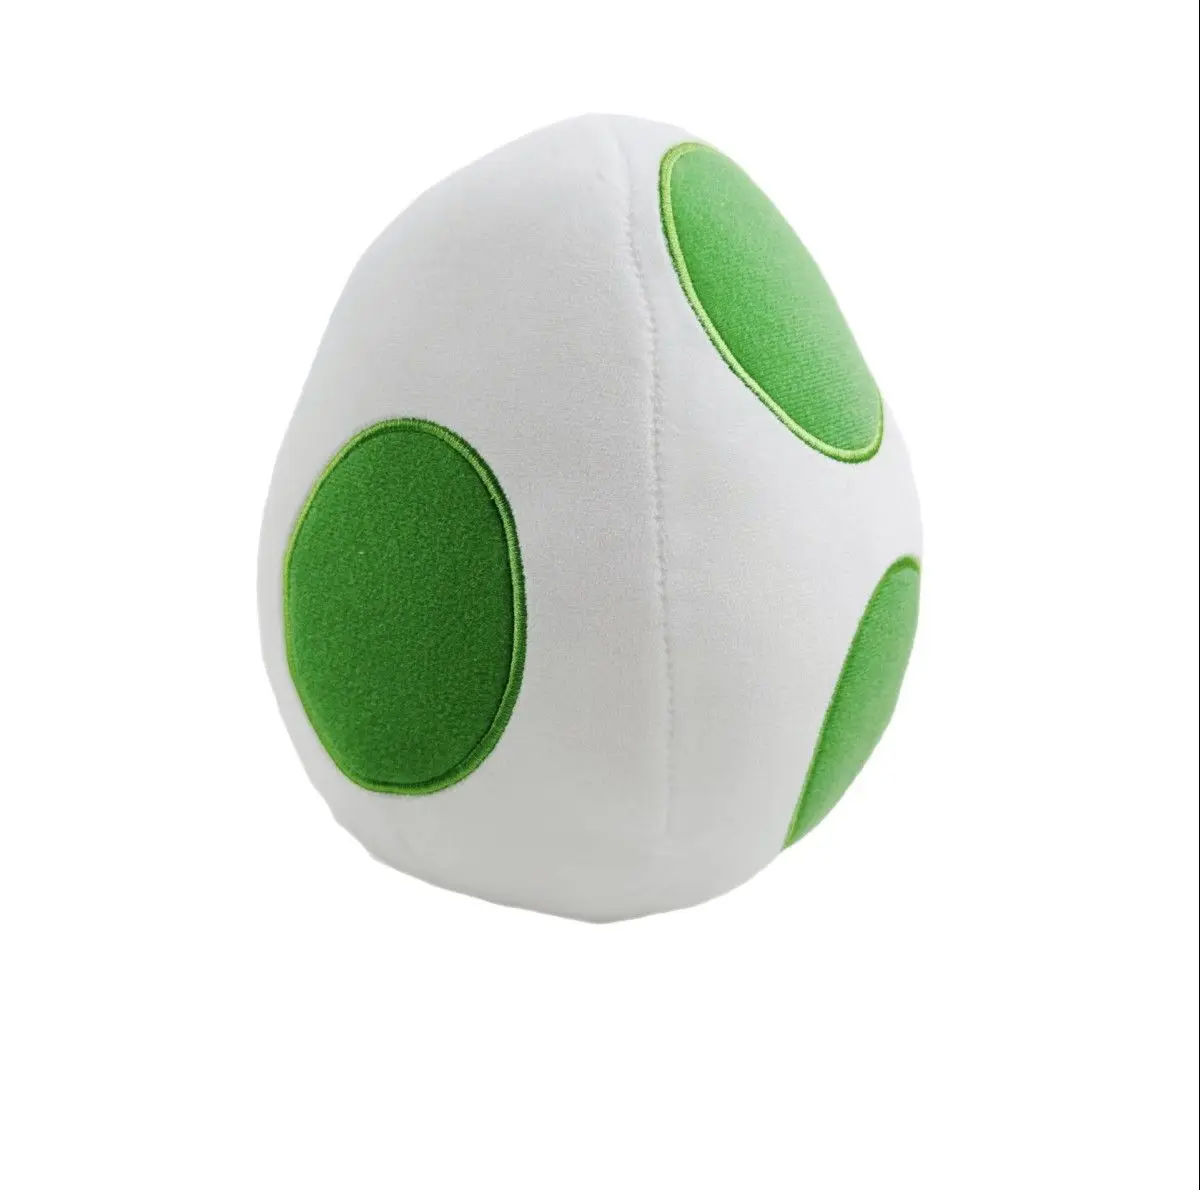 21cm Super Mario Nintendo Yoshi Egg Soft Plush Toy